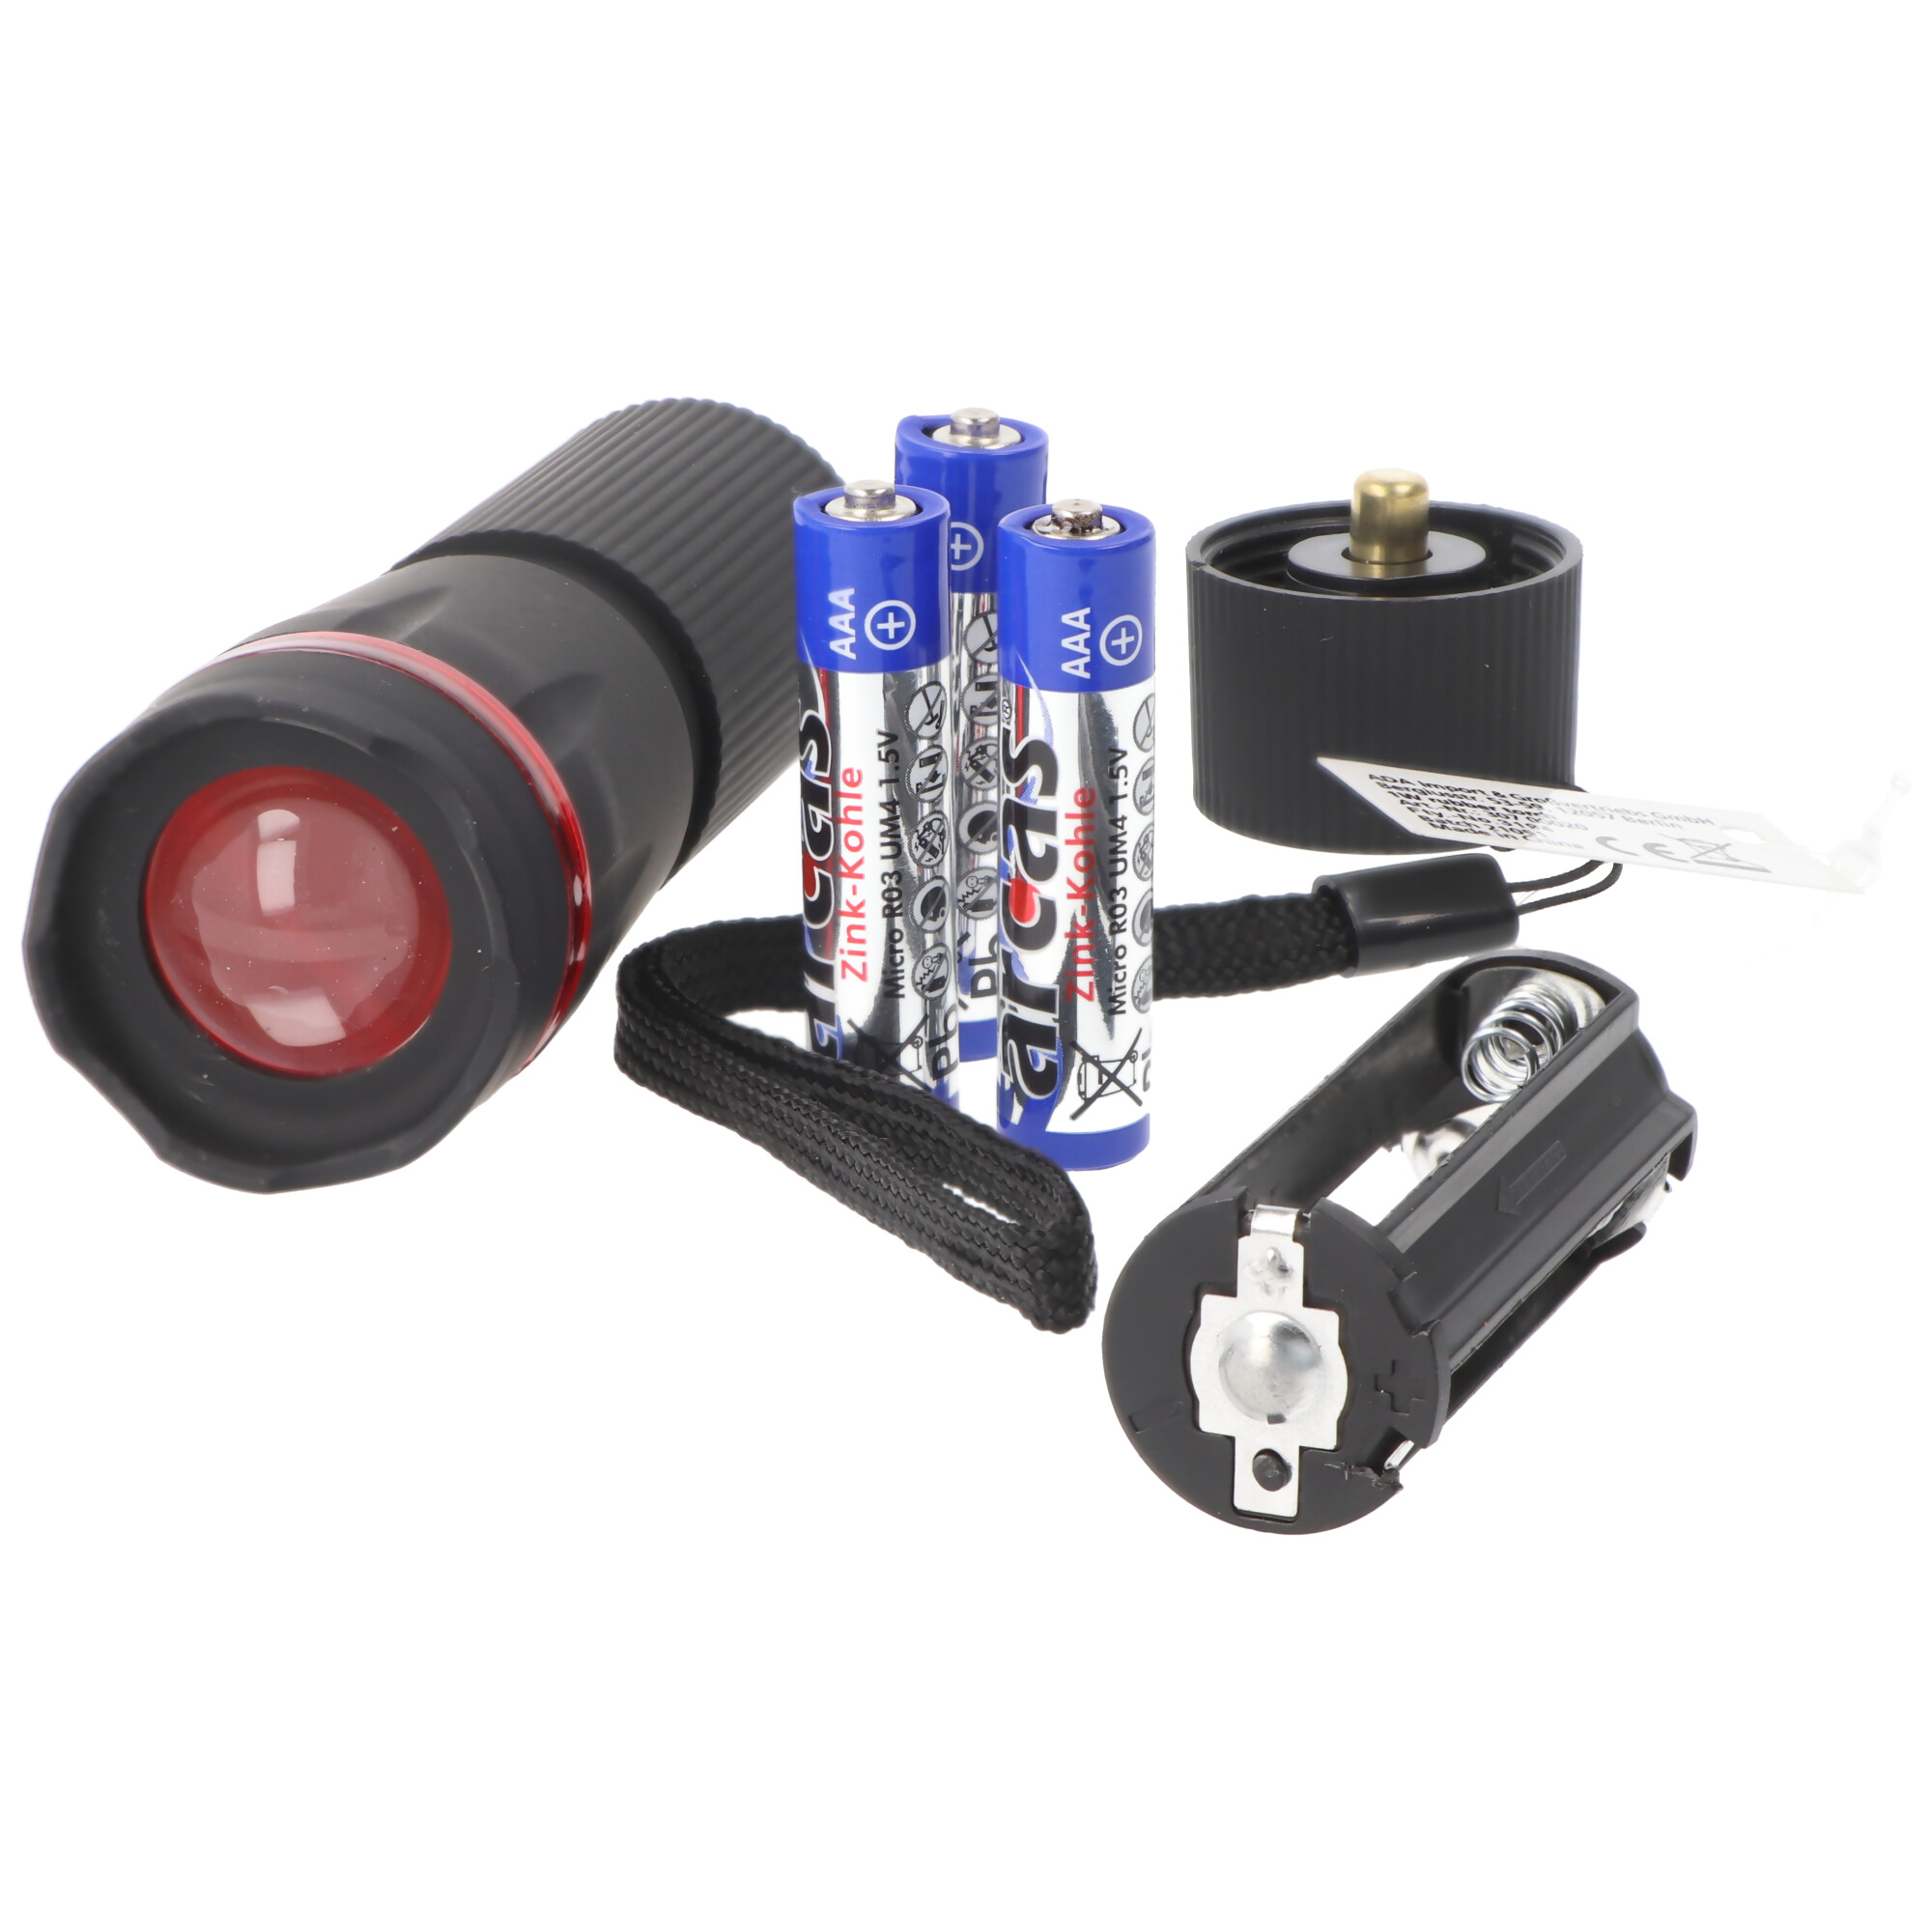 1 Watt LED Zoom Taschenlampe mit Zoom max. 60 Lumen inklusive 3 AAA Micro Batterien